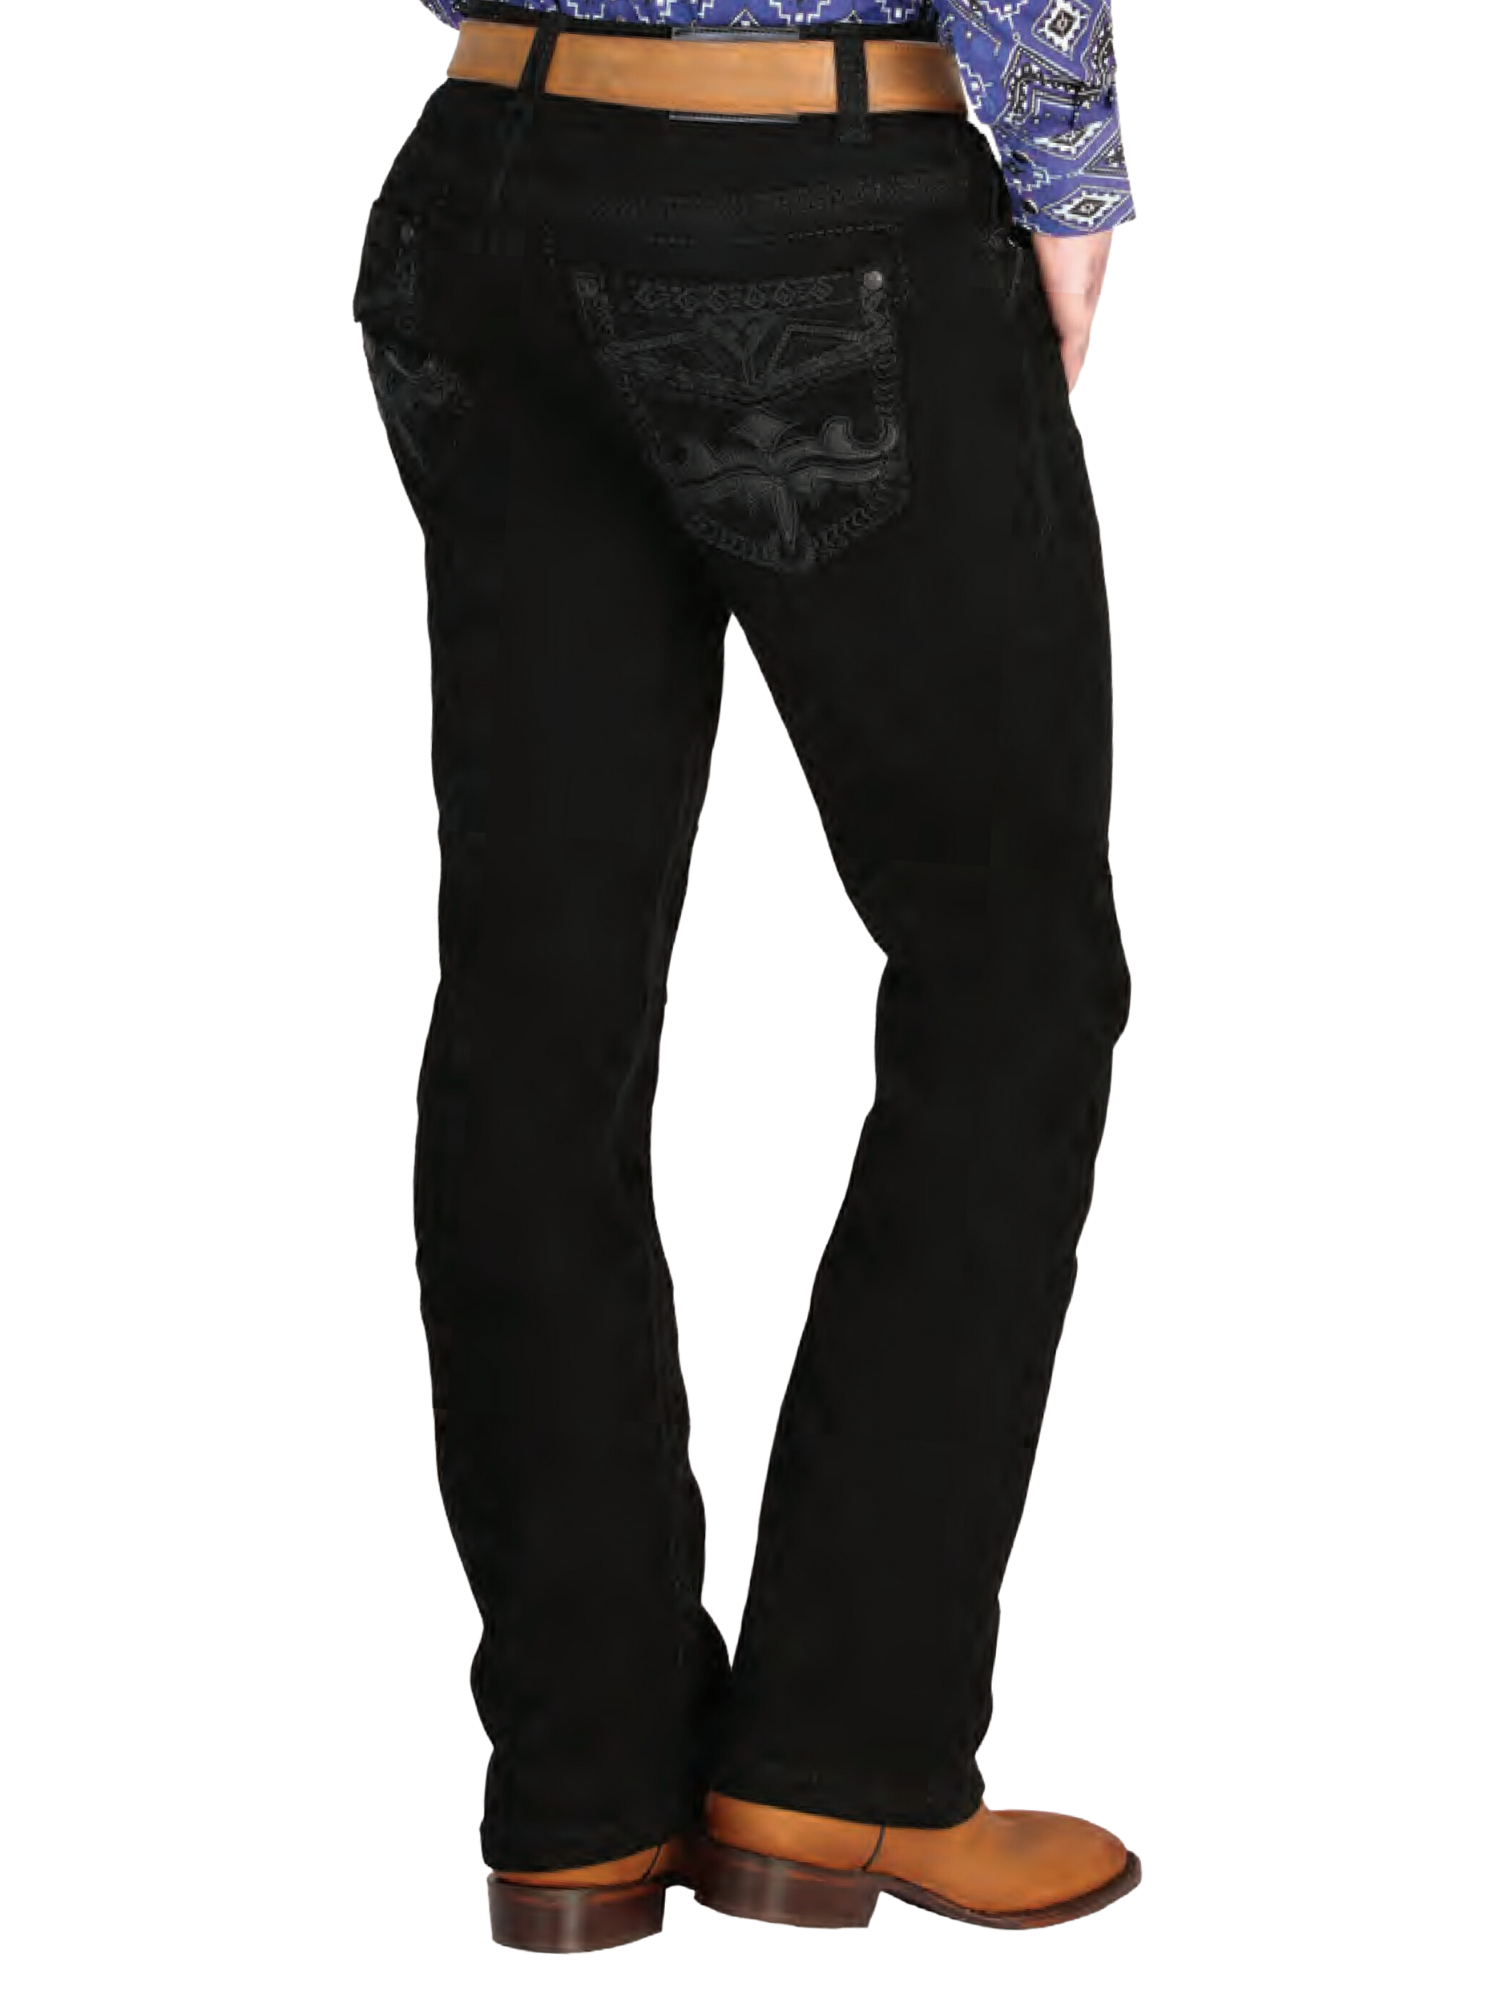 Pantalon Vaquero de Mezclilla Boot Cut Negro para Hombre 'Centenario' - ID: 44837 Denim Jeans Centenario 